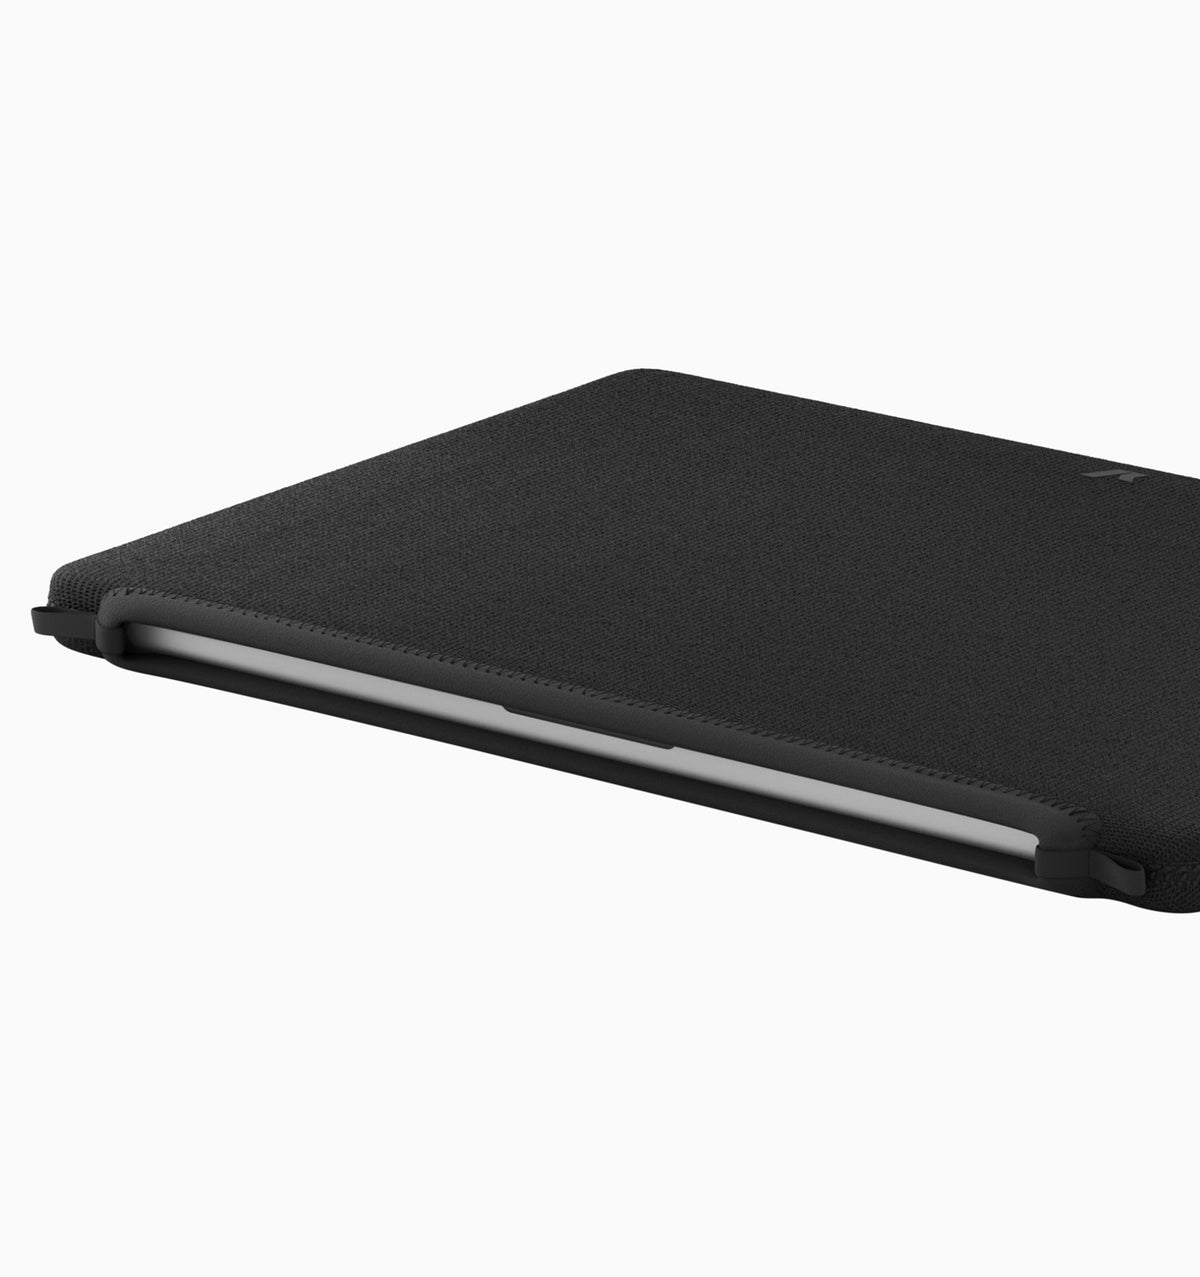 Rushfaster Laptop Sleeve For 14"/16" MacBook Pro Black